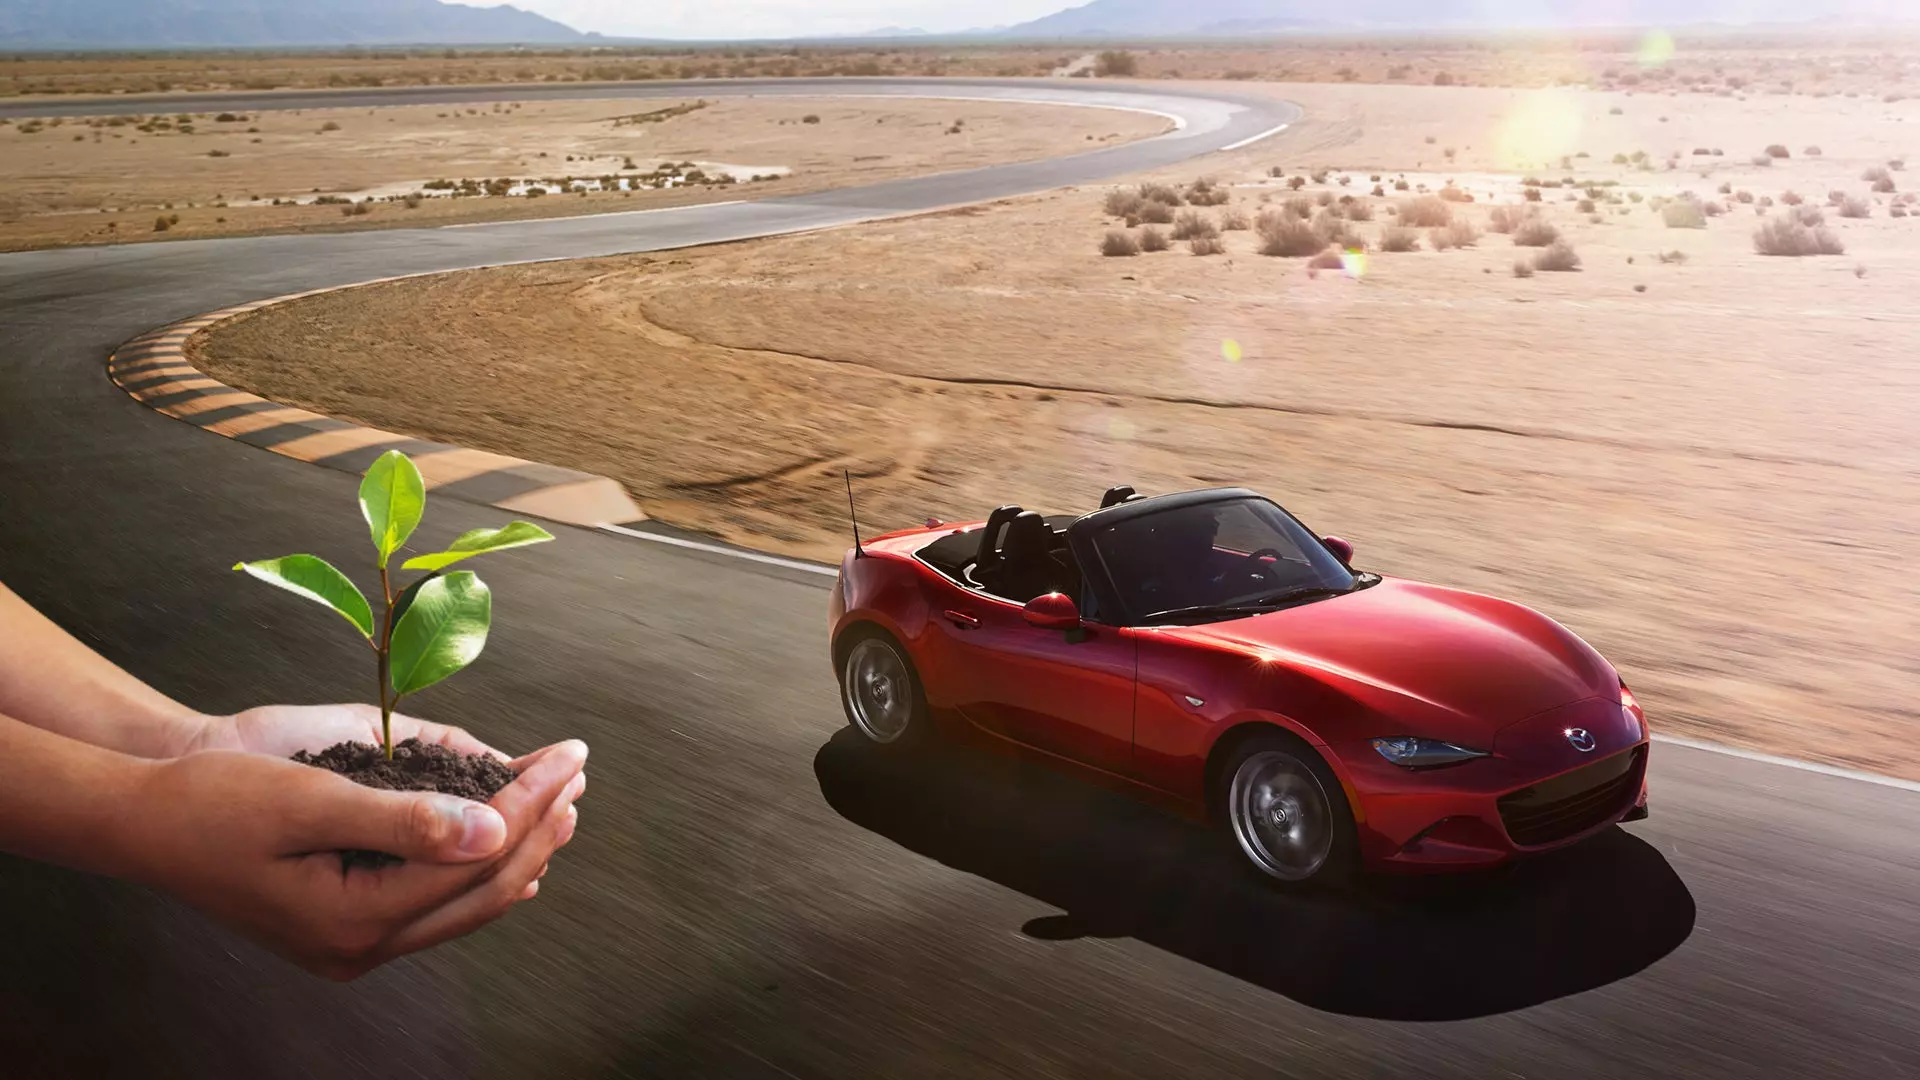 The Next Mazda Miata Will Reportedly Use Hybrid Tech, Compression Ignition | Autance